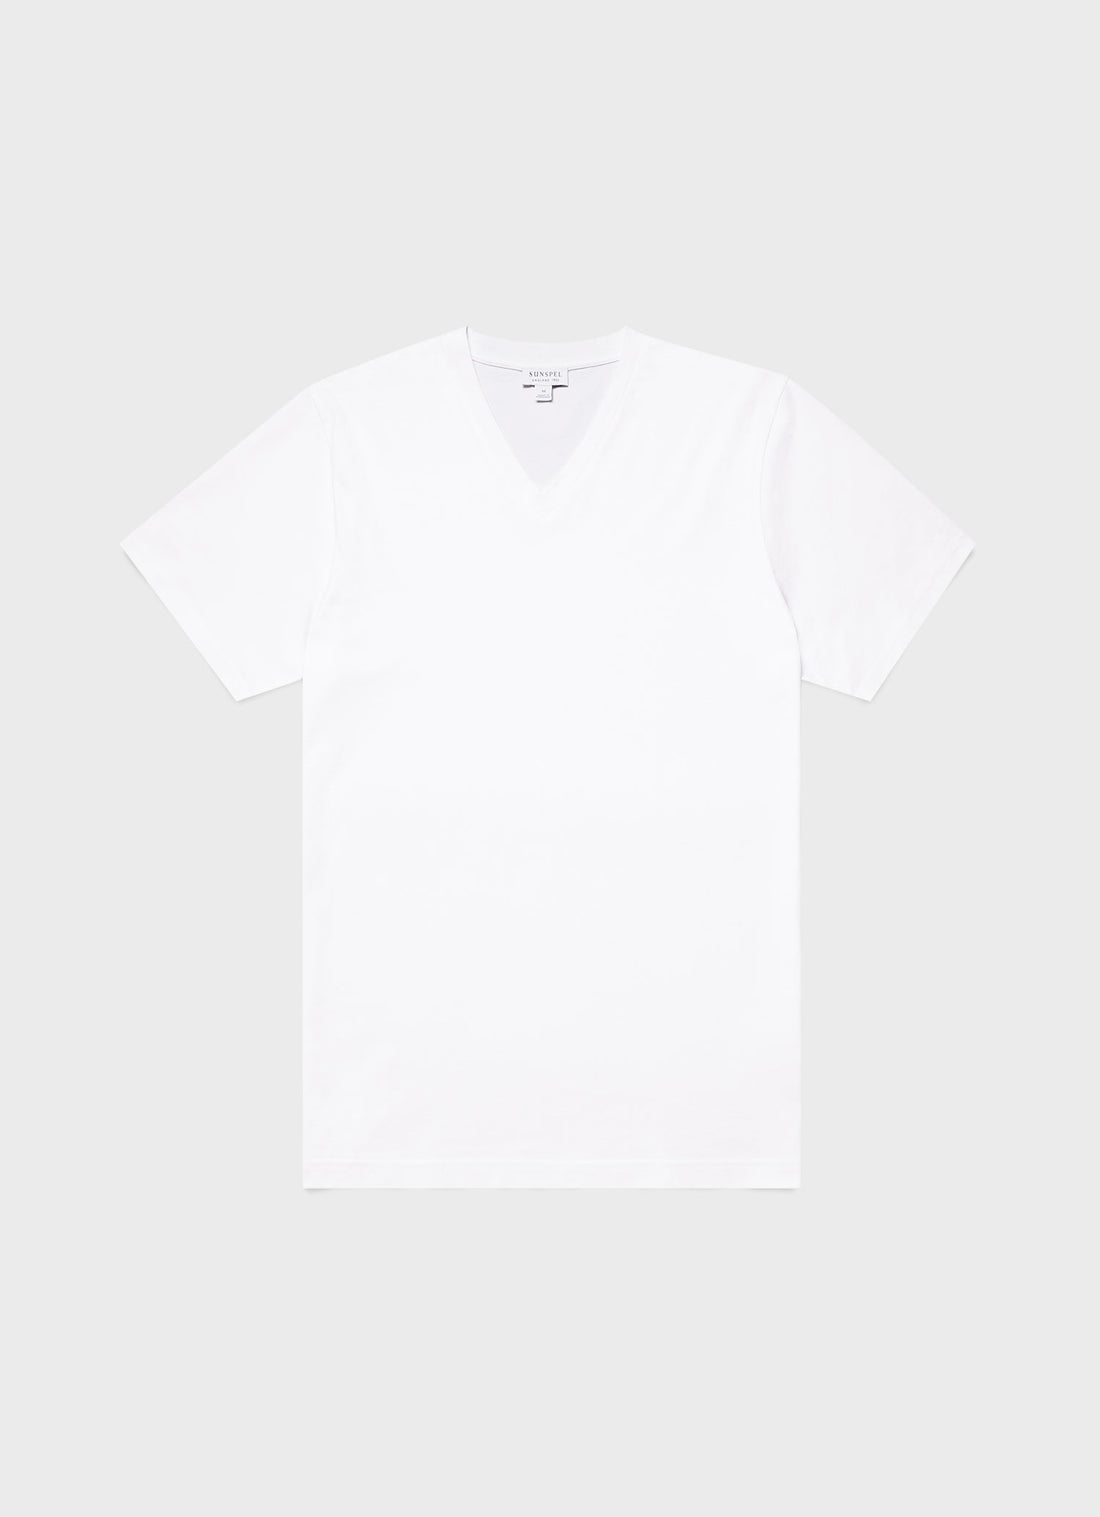 Men's Riviera V-neck T-shirt in White